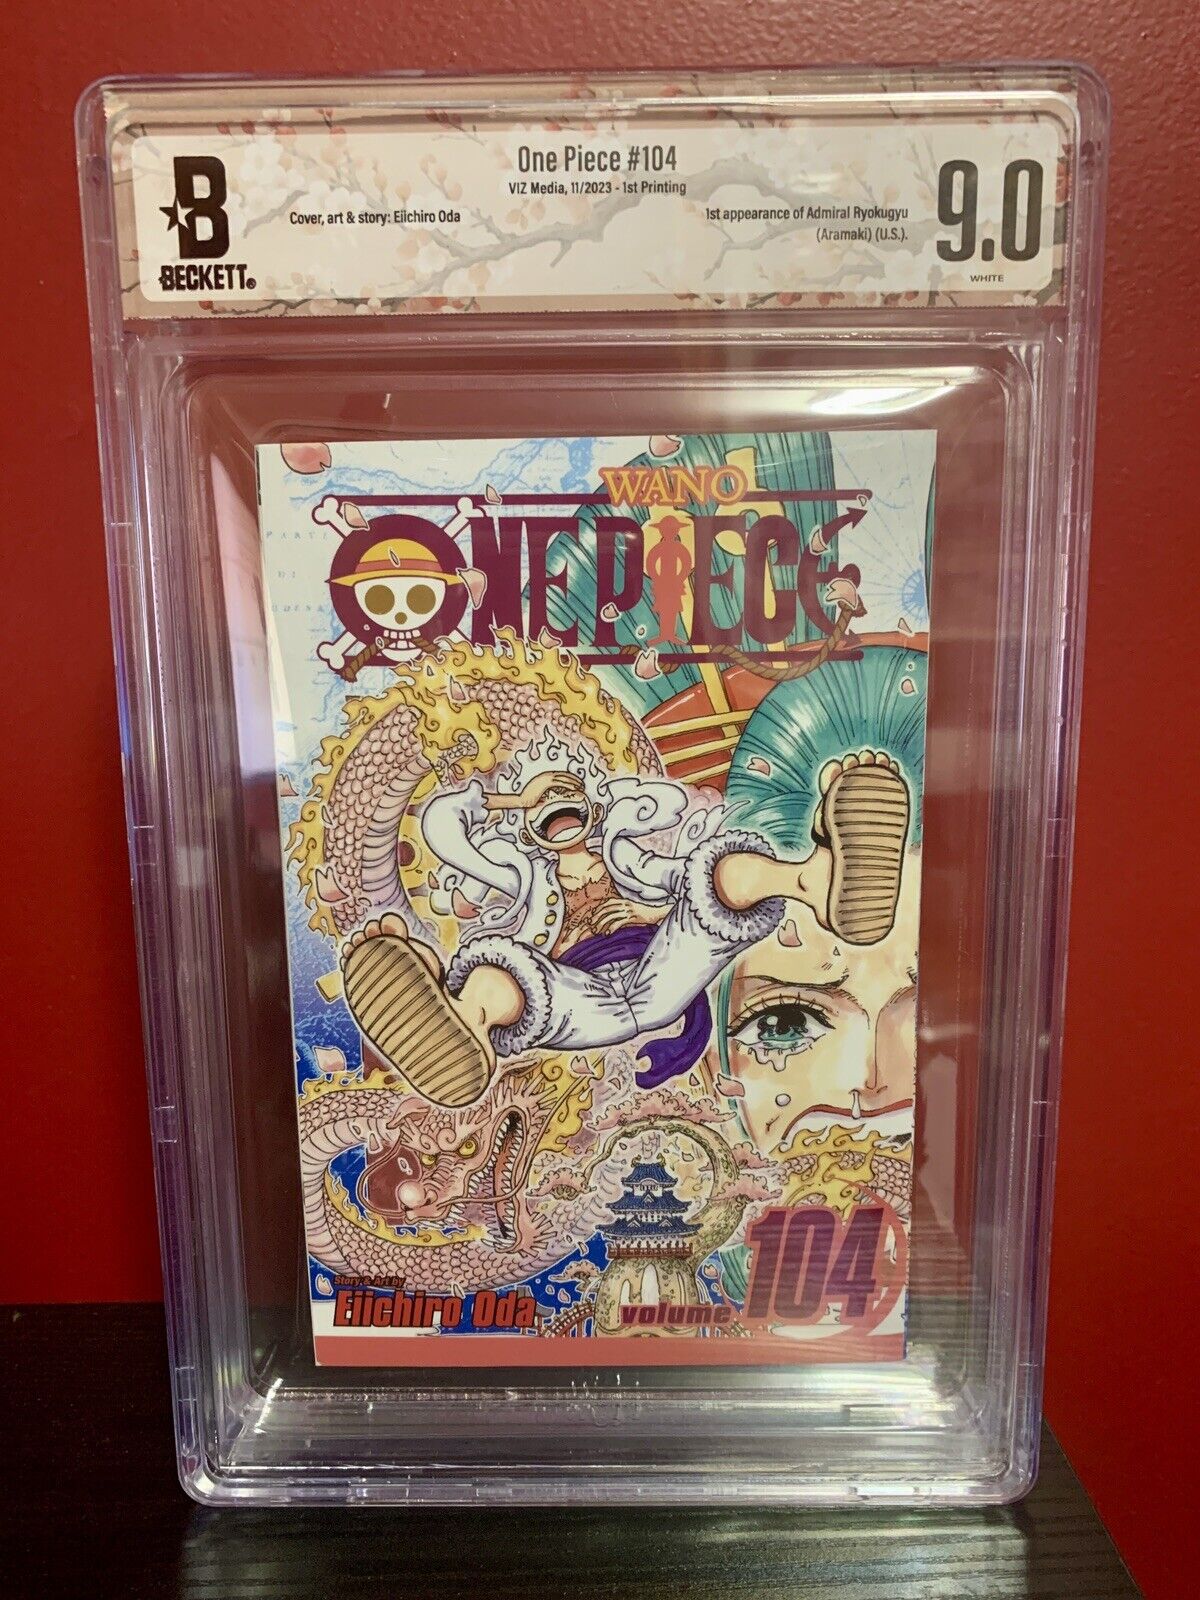 One Piece Manga Volume 104 1st Printing English Beckett Graded BGS 9.0